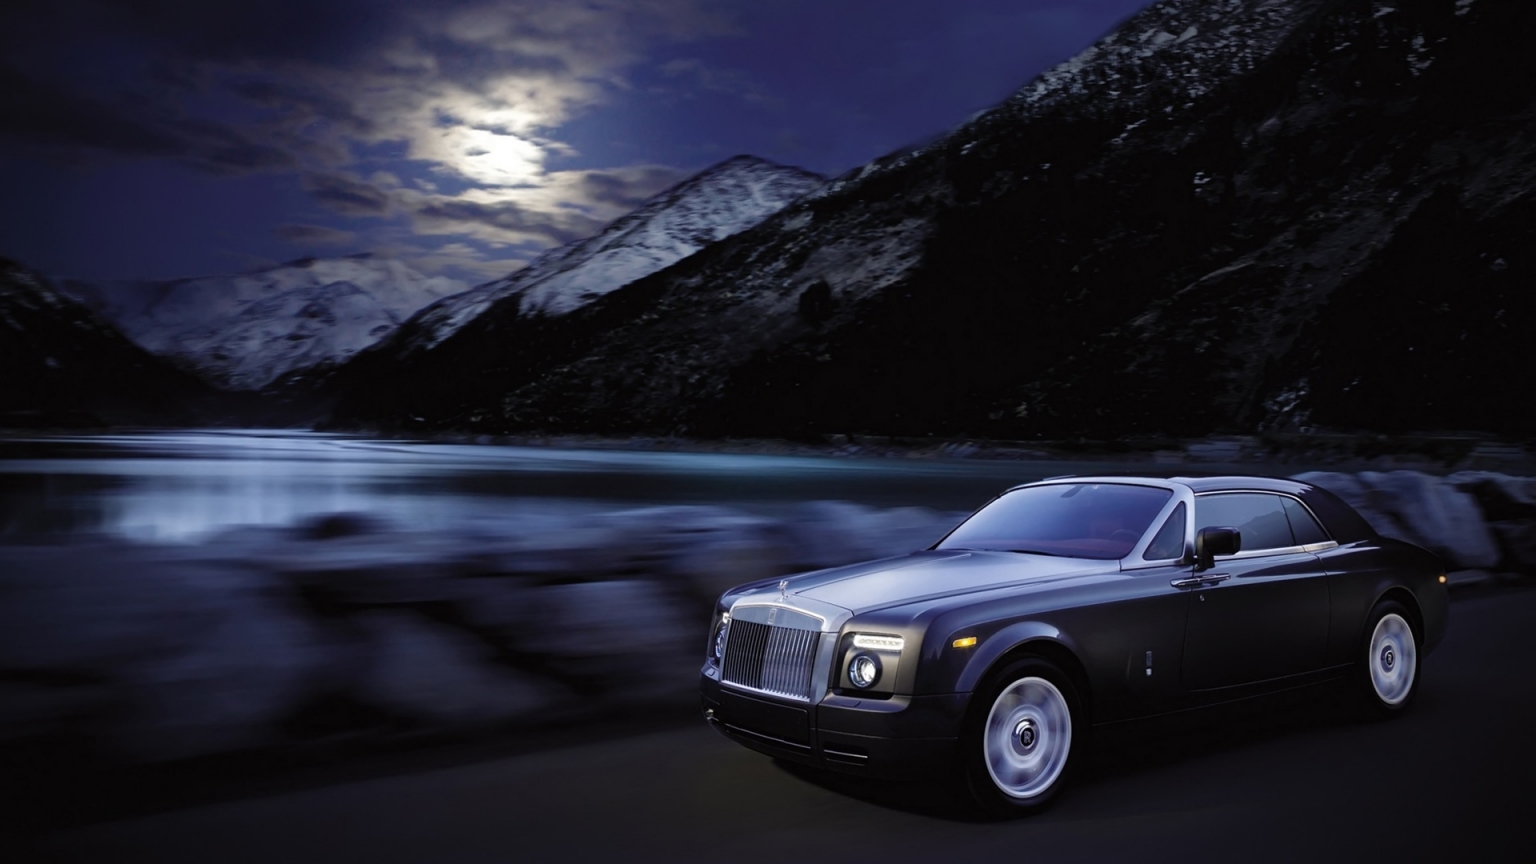 Rolls Royce Phantom Coupe Night 2010 for 1536 x 864 HDTV resolution